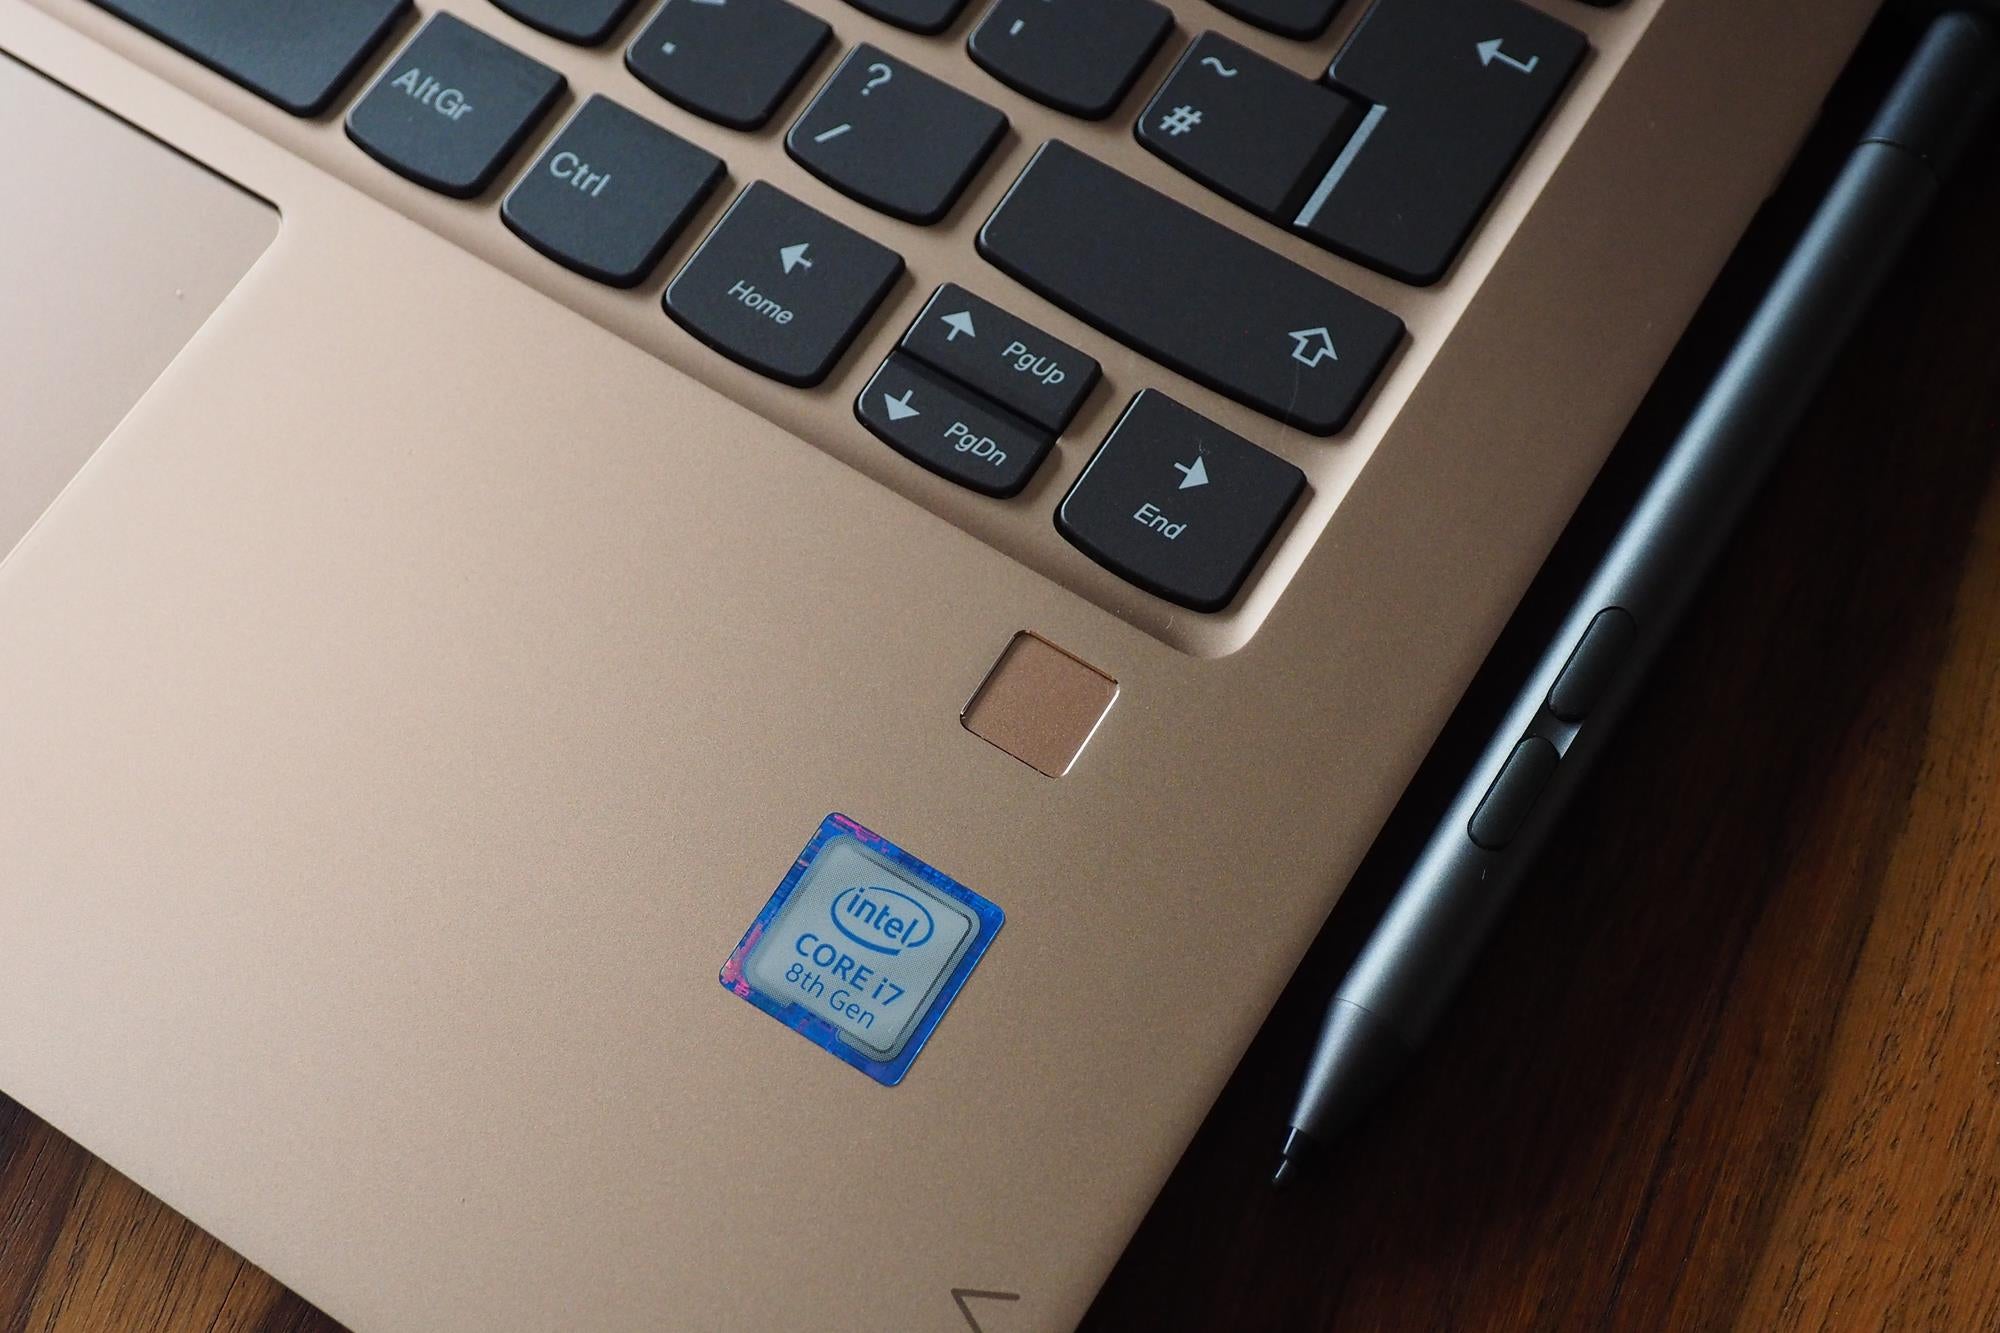 Lenovo Yoga 920 laptop with Intel Core i7 sticker and stylus.